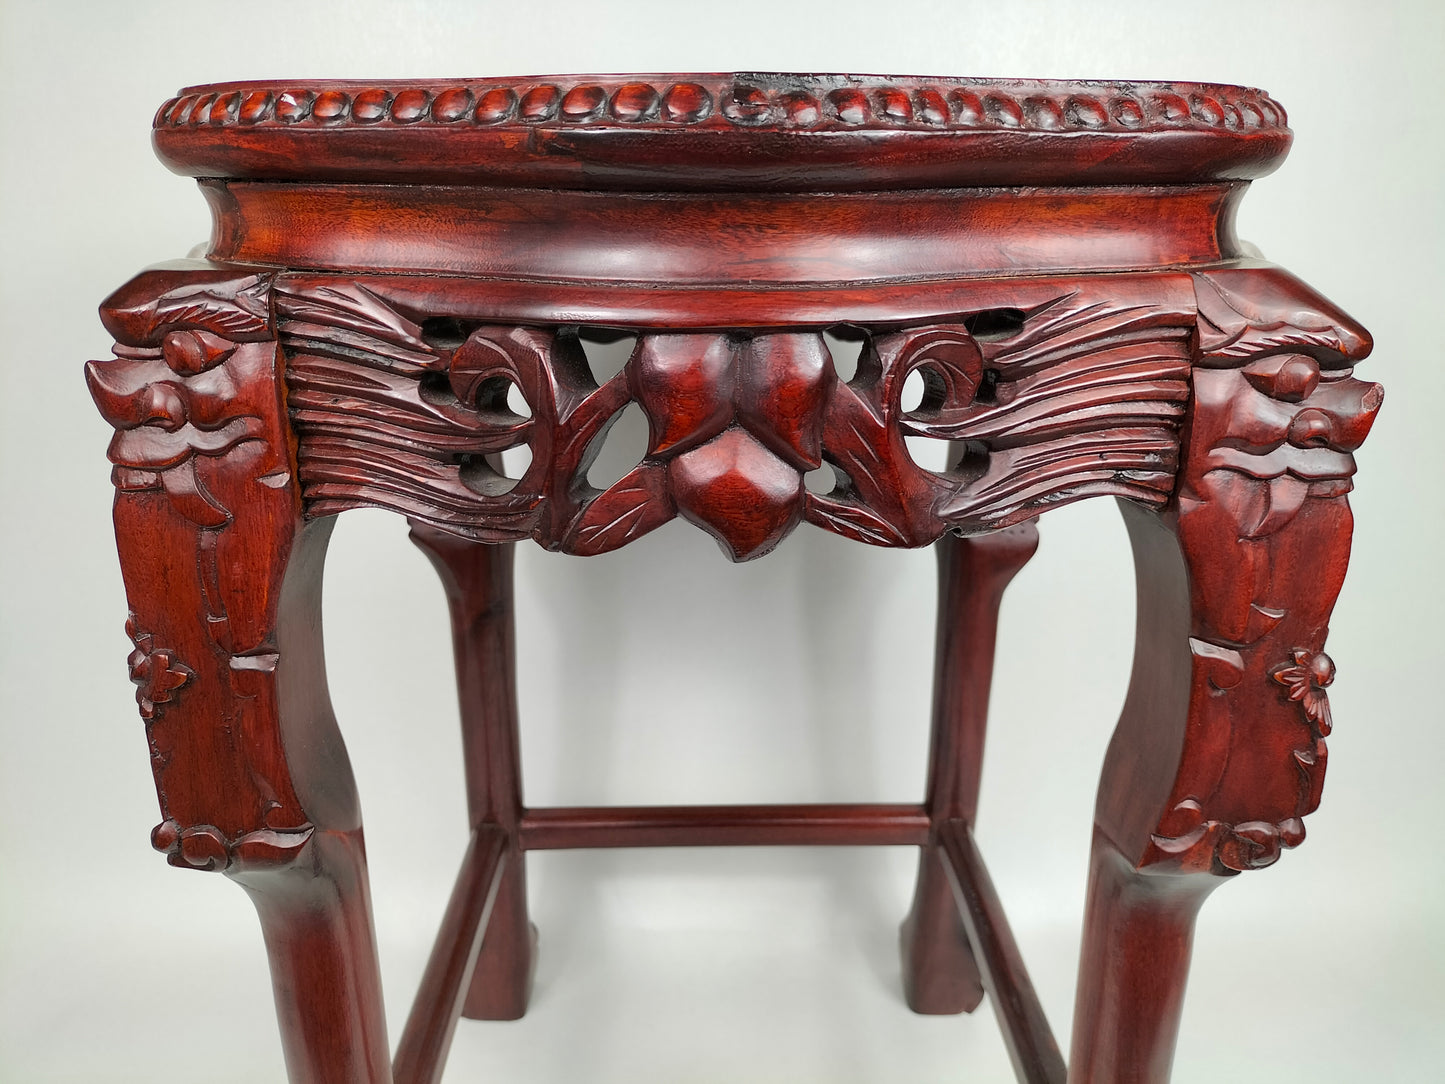 Meja sisi kayu Cina bertatahkan bahagian atas marmar // Rosewood - abad ke-20